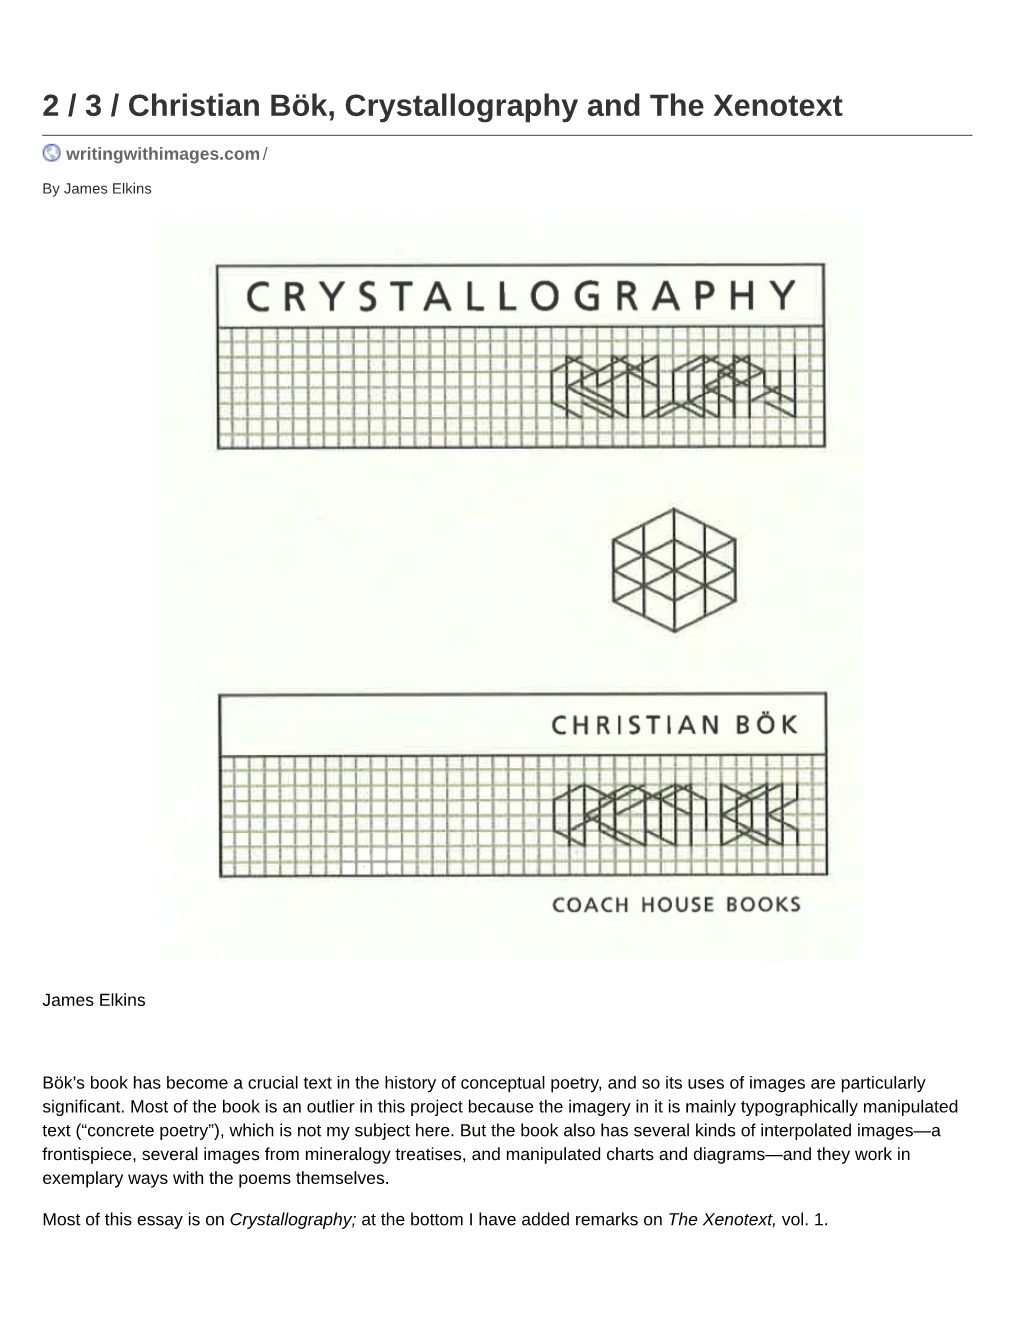 2 / 3 / Christian Bök, Crystallography and the Xenotext